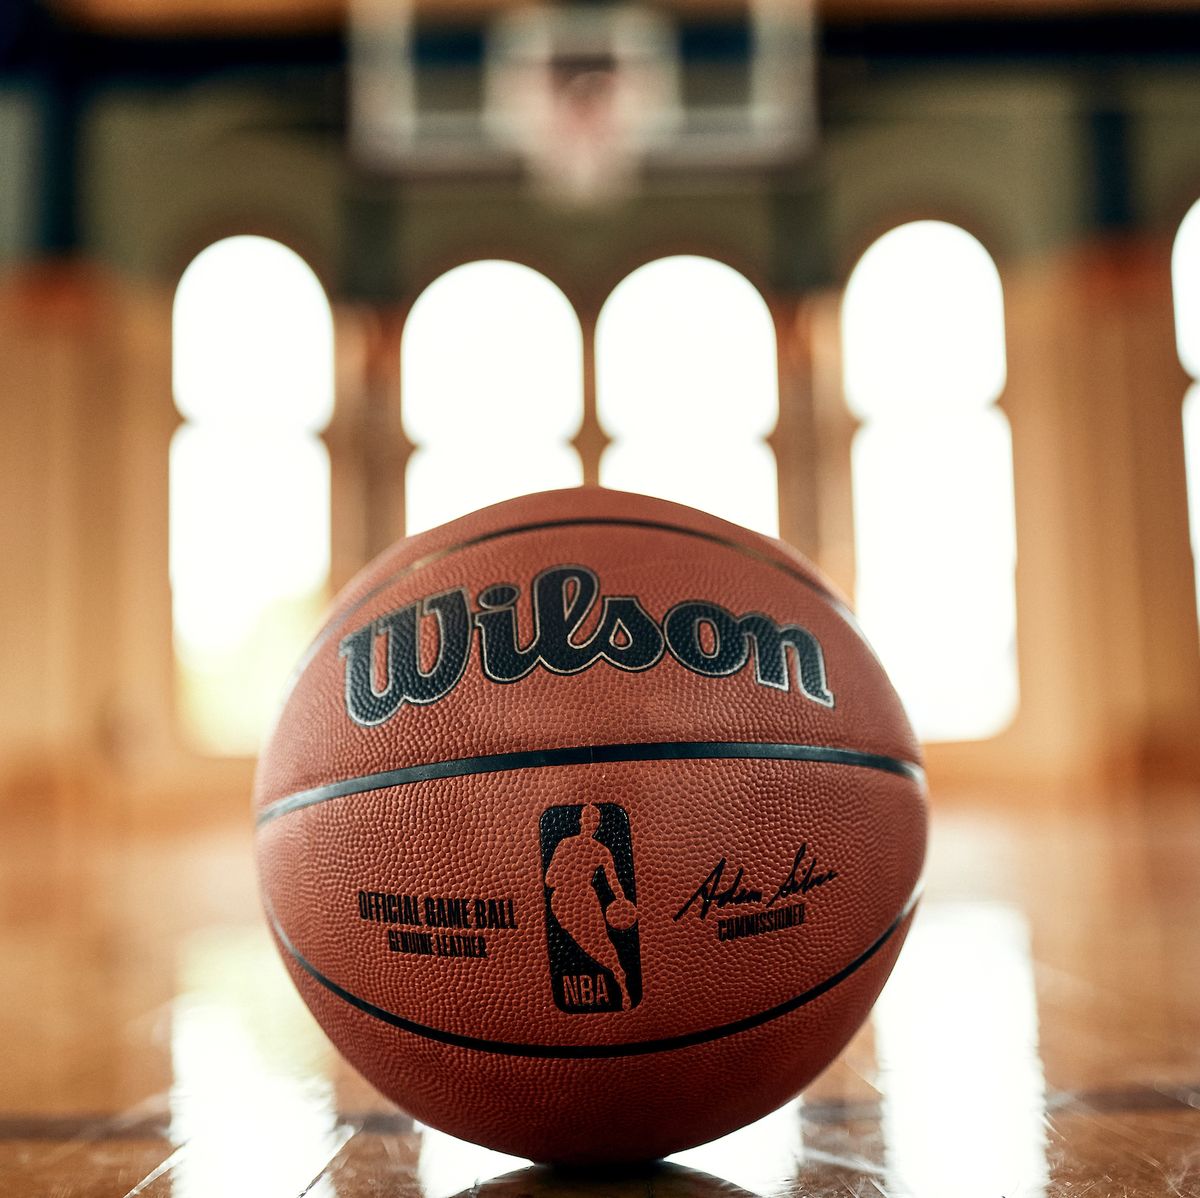 Basketball Spalding NBA Realistic Game Ball 3D model